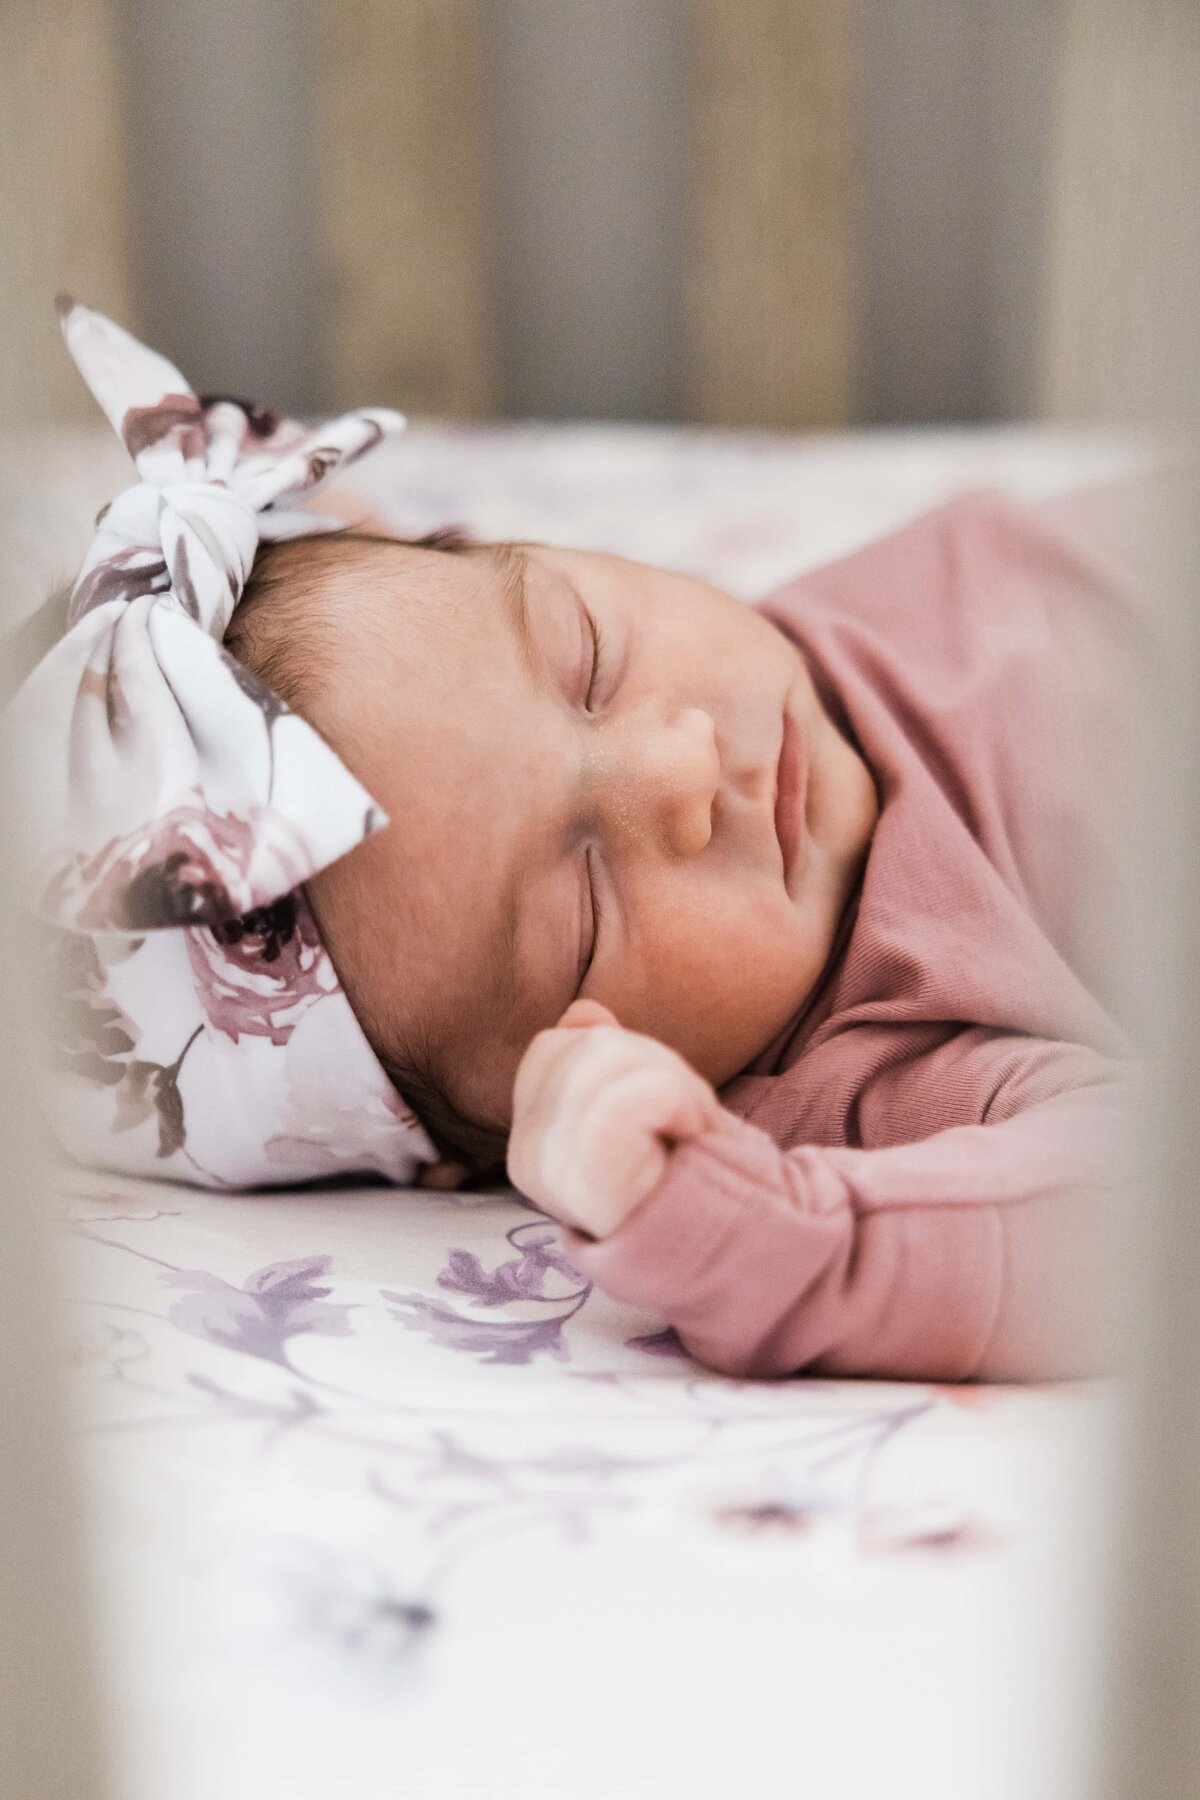 A newborn baby sleeps peacefully with a floral headband, showcasing the DIY newborn photos.